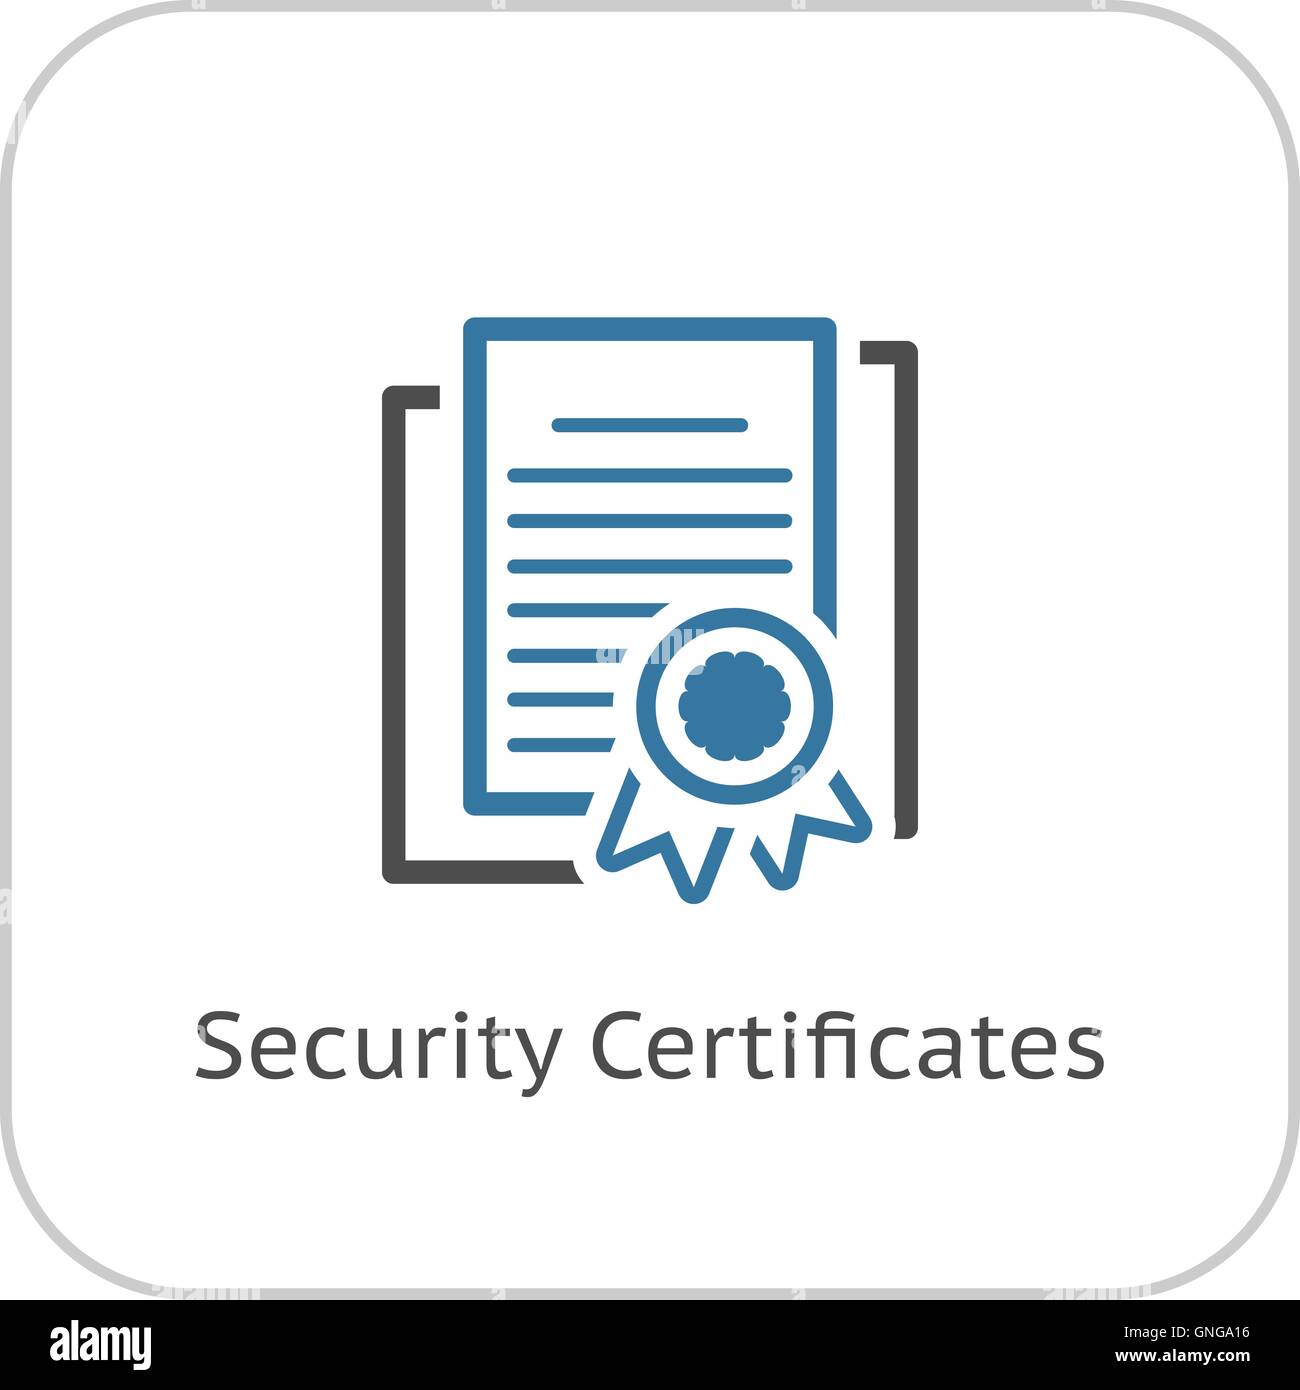 Security Certificates Icon. Flat Design. Stock Vector